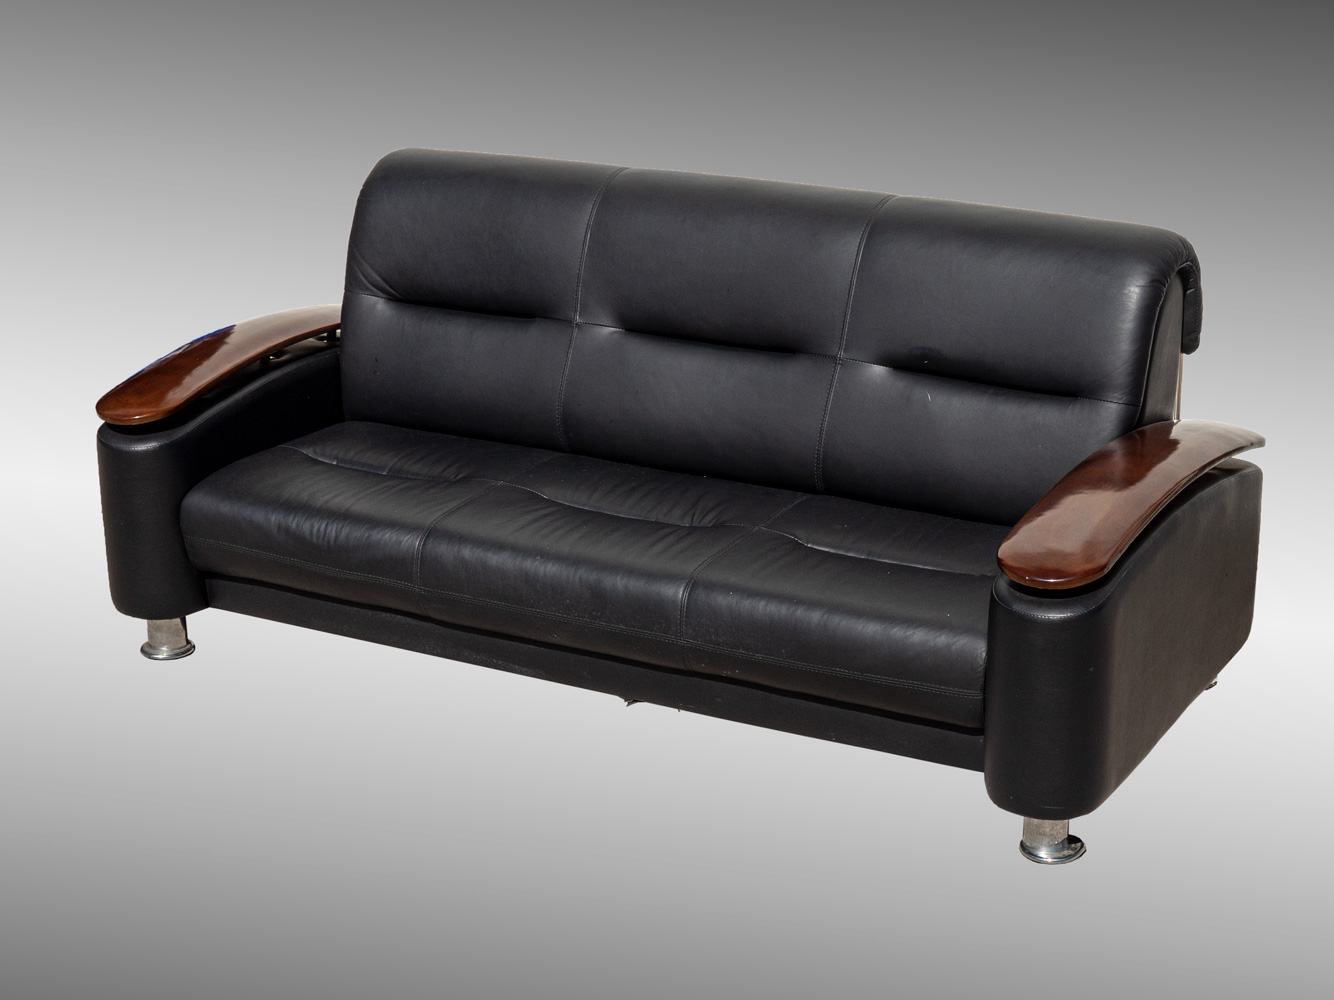 MODERN LEATHER SOFA: Black leather sofa,